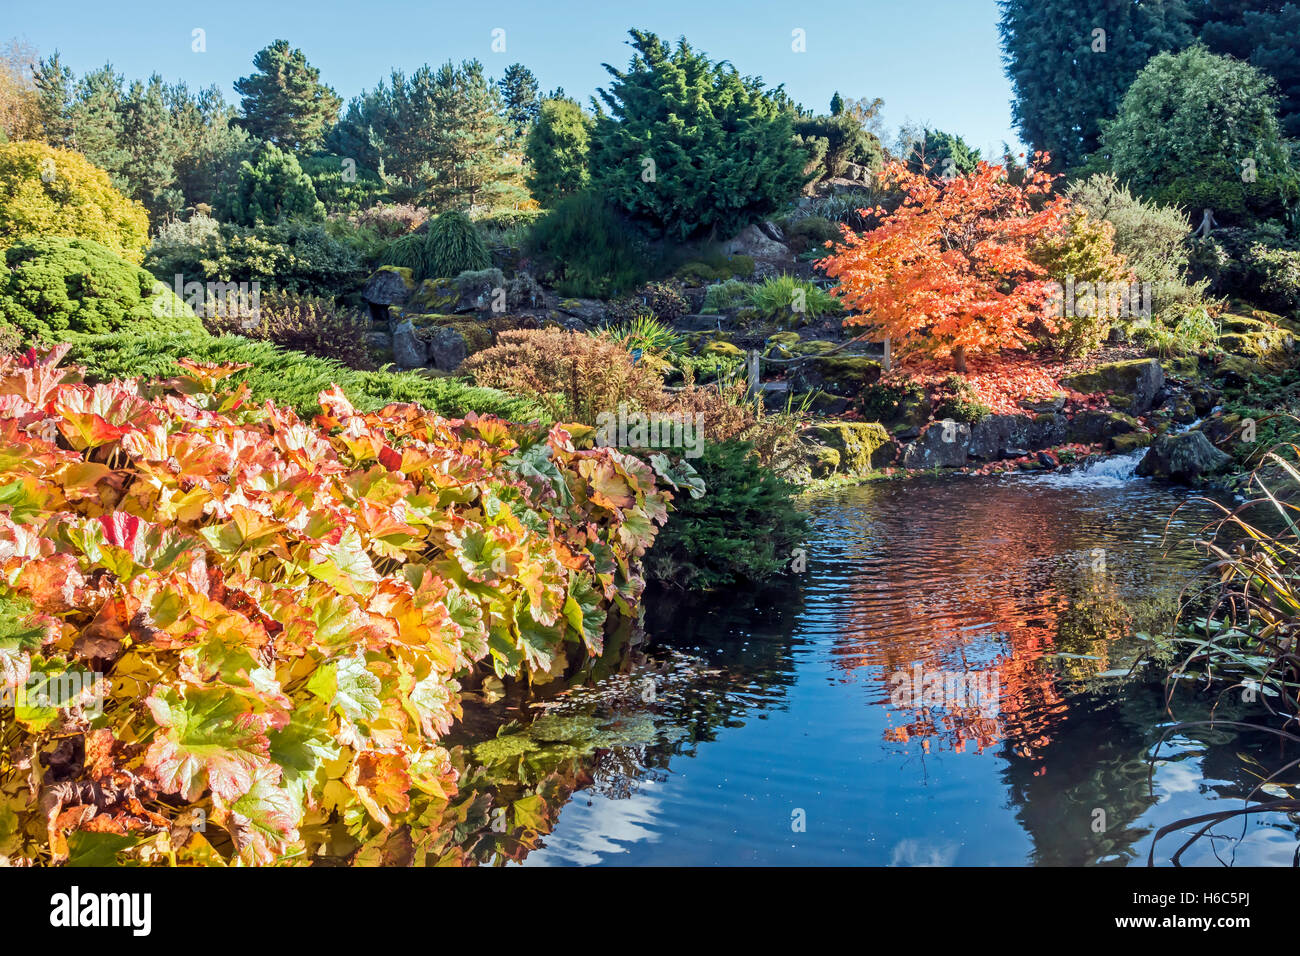 The Rock Garden and stream area in Royal Botanic Garden in Edinburgh Scotland in autumn colours & Acer Sieboldianum plant right Stock Photo